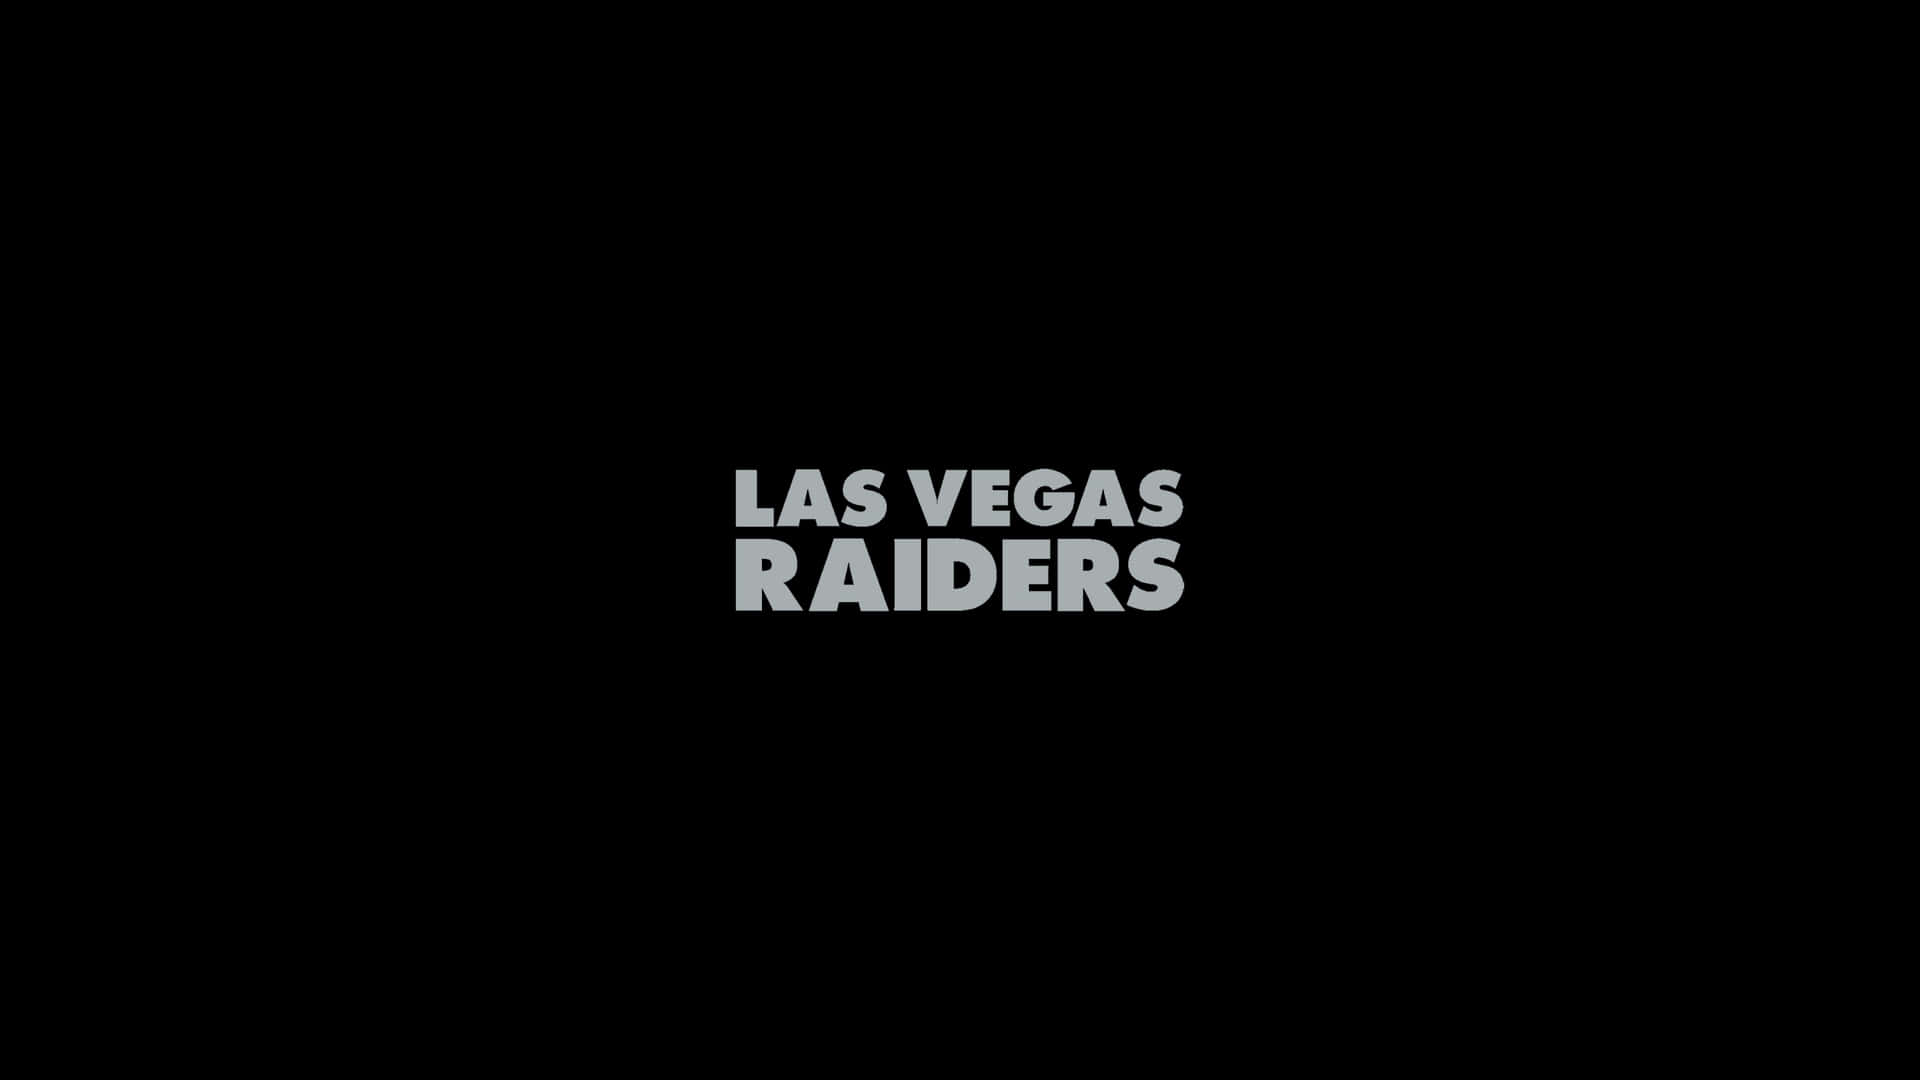 Las Vegas Raiders Logo Black Background Wallpaper